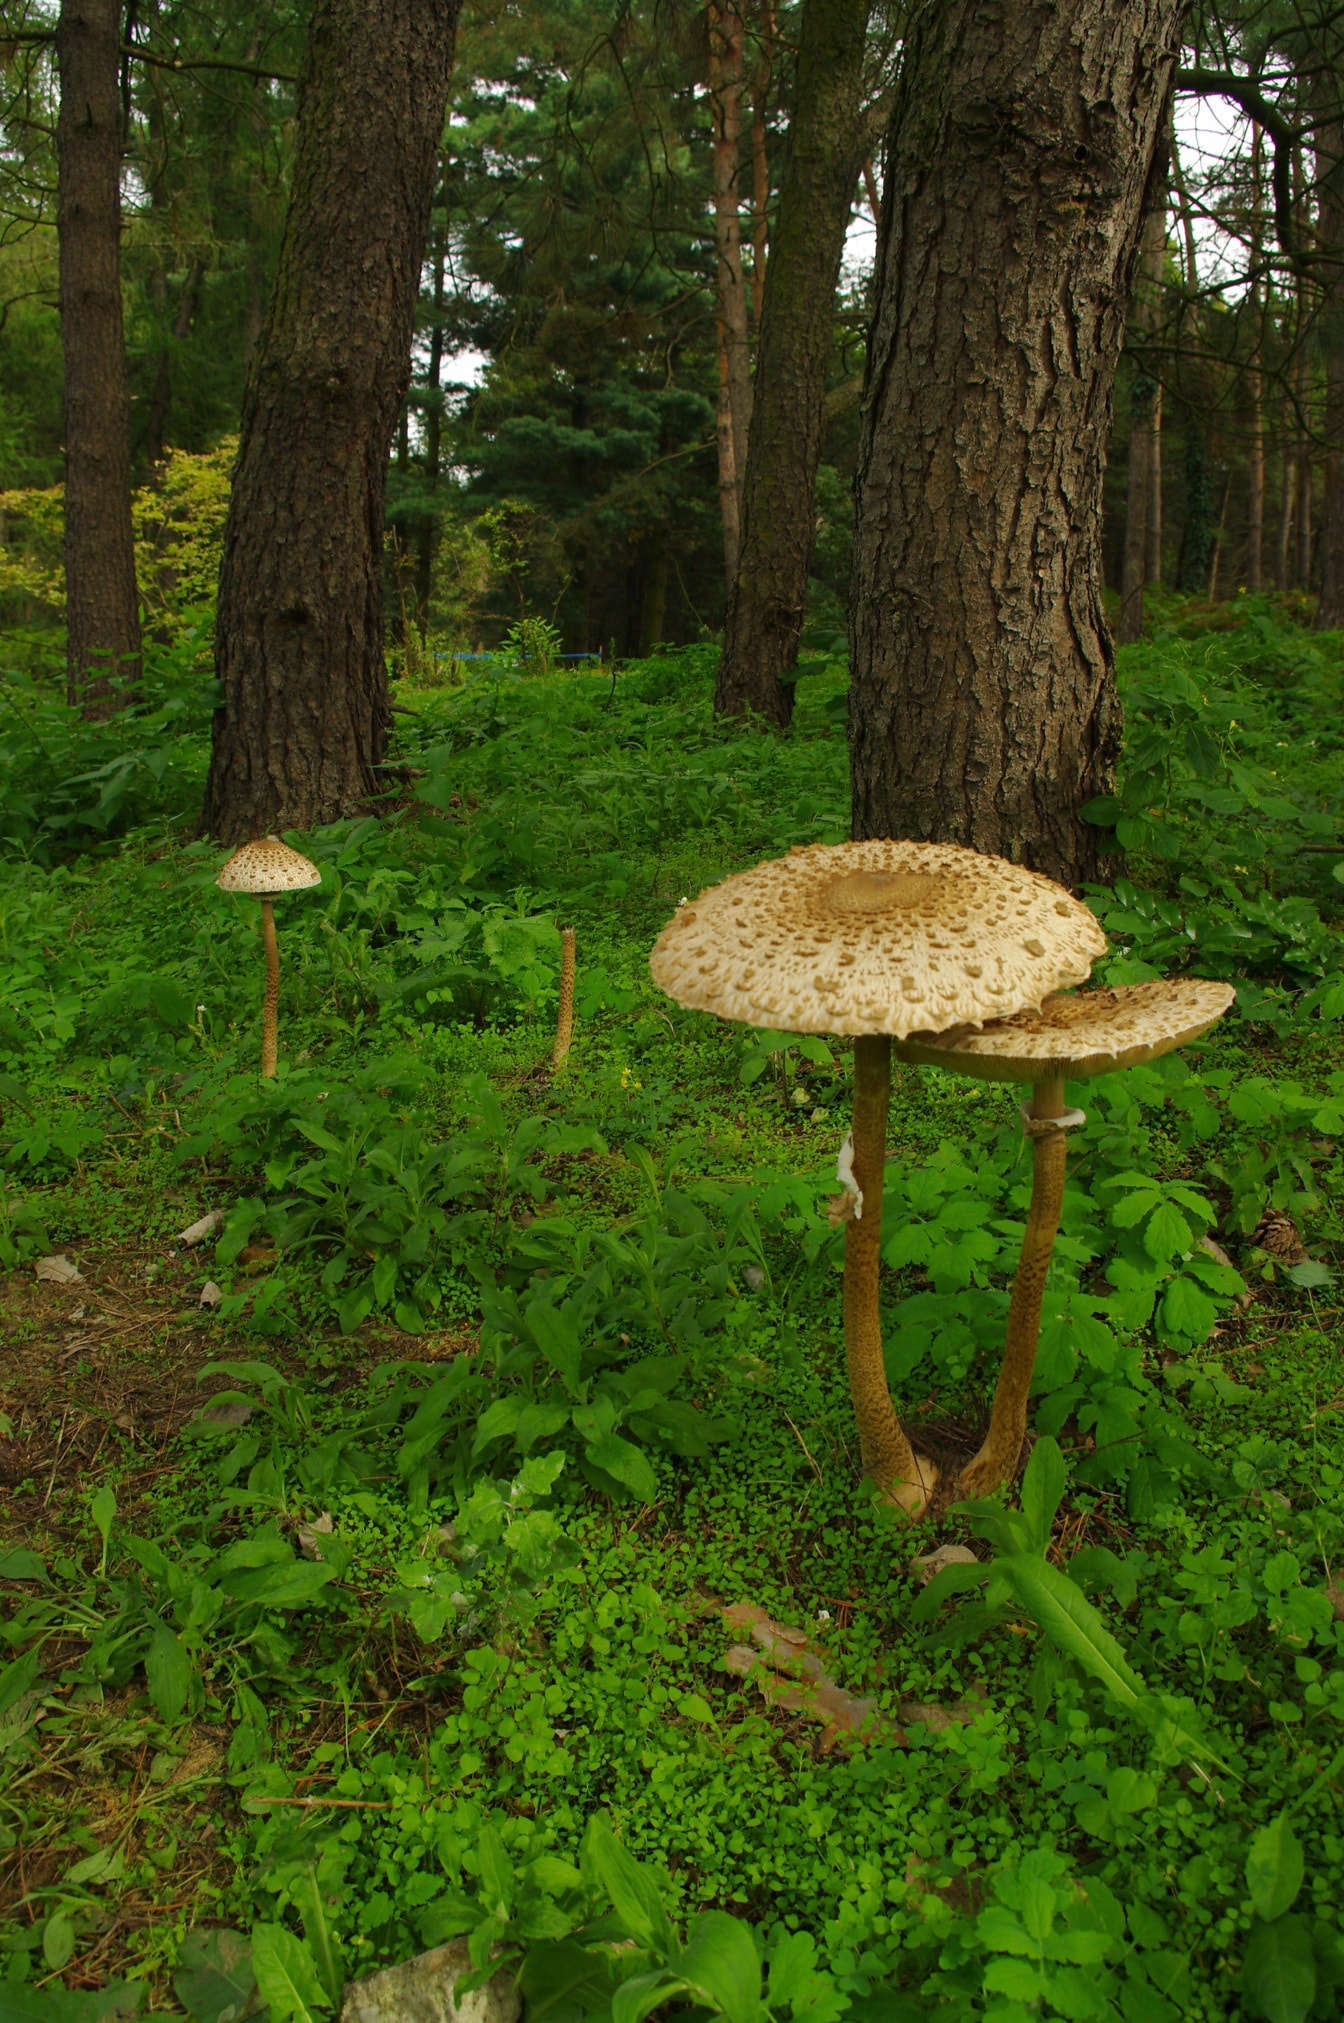 Big parasol mushroom (Macrolepiota procera) in forest